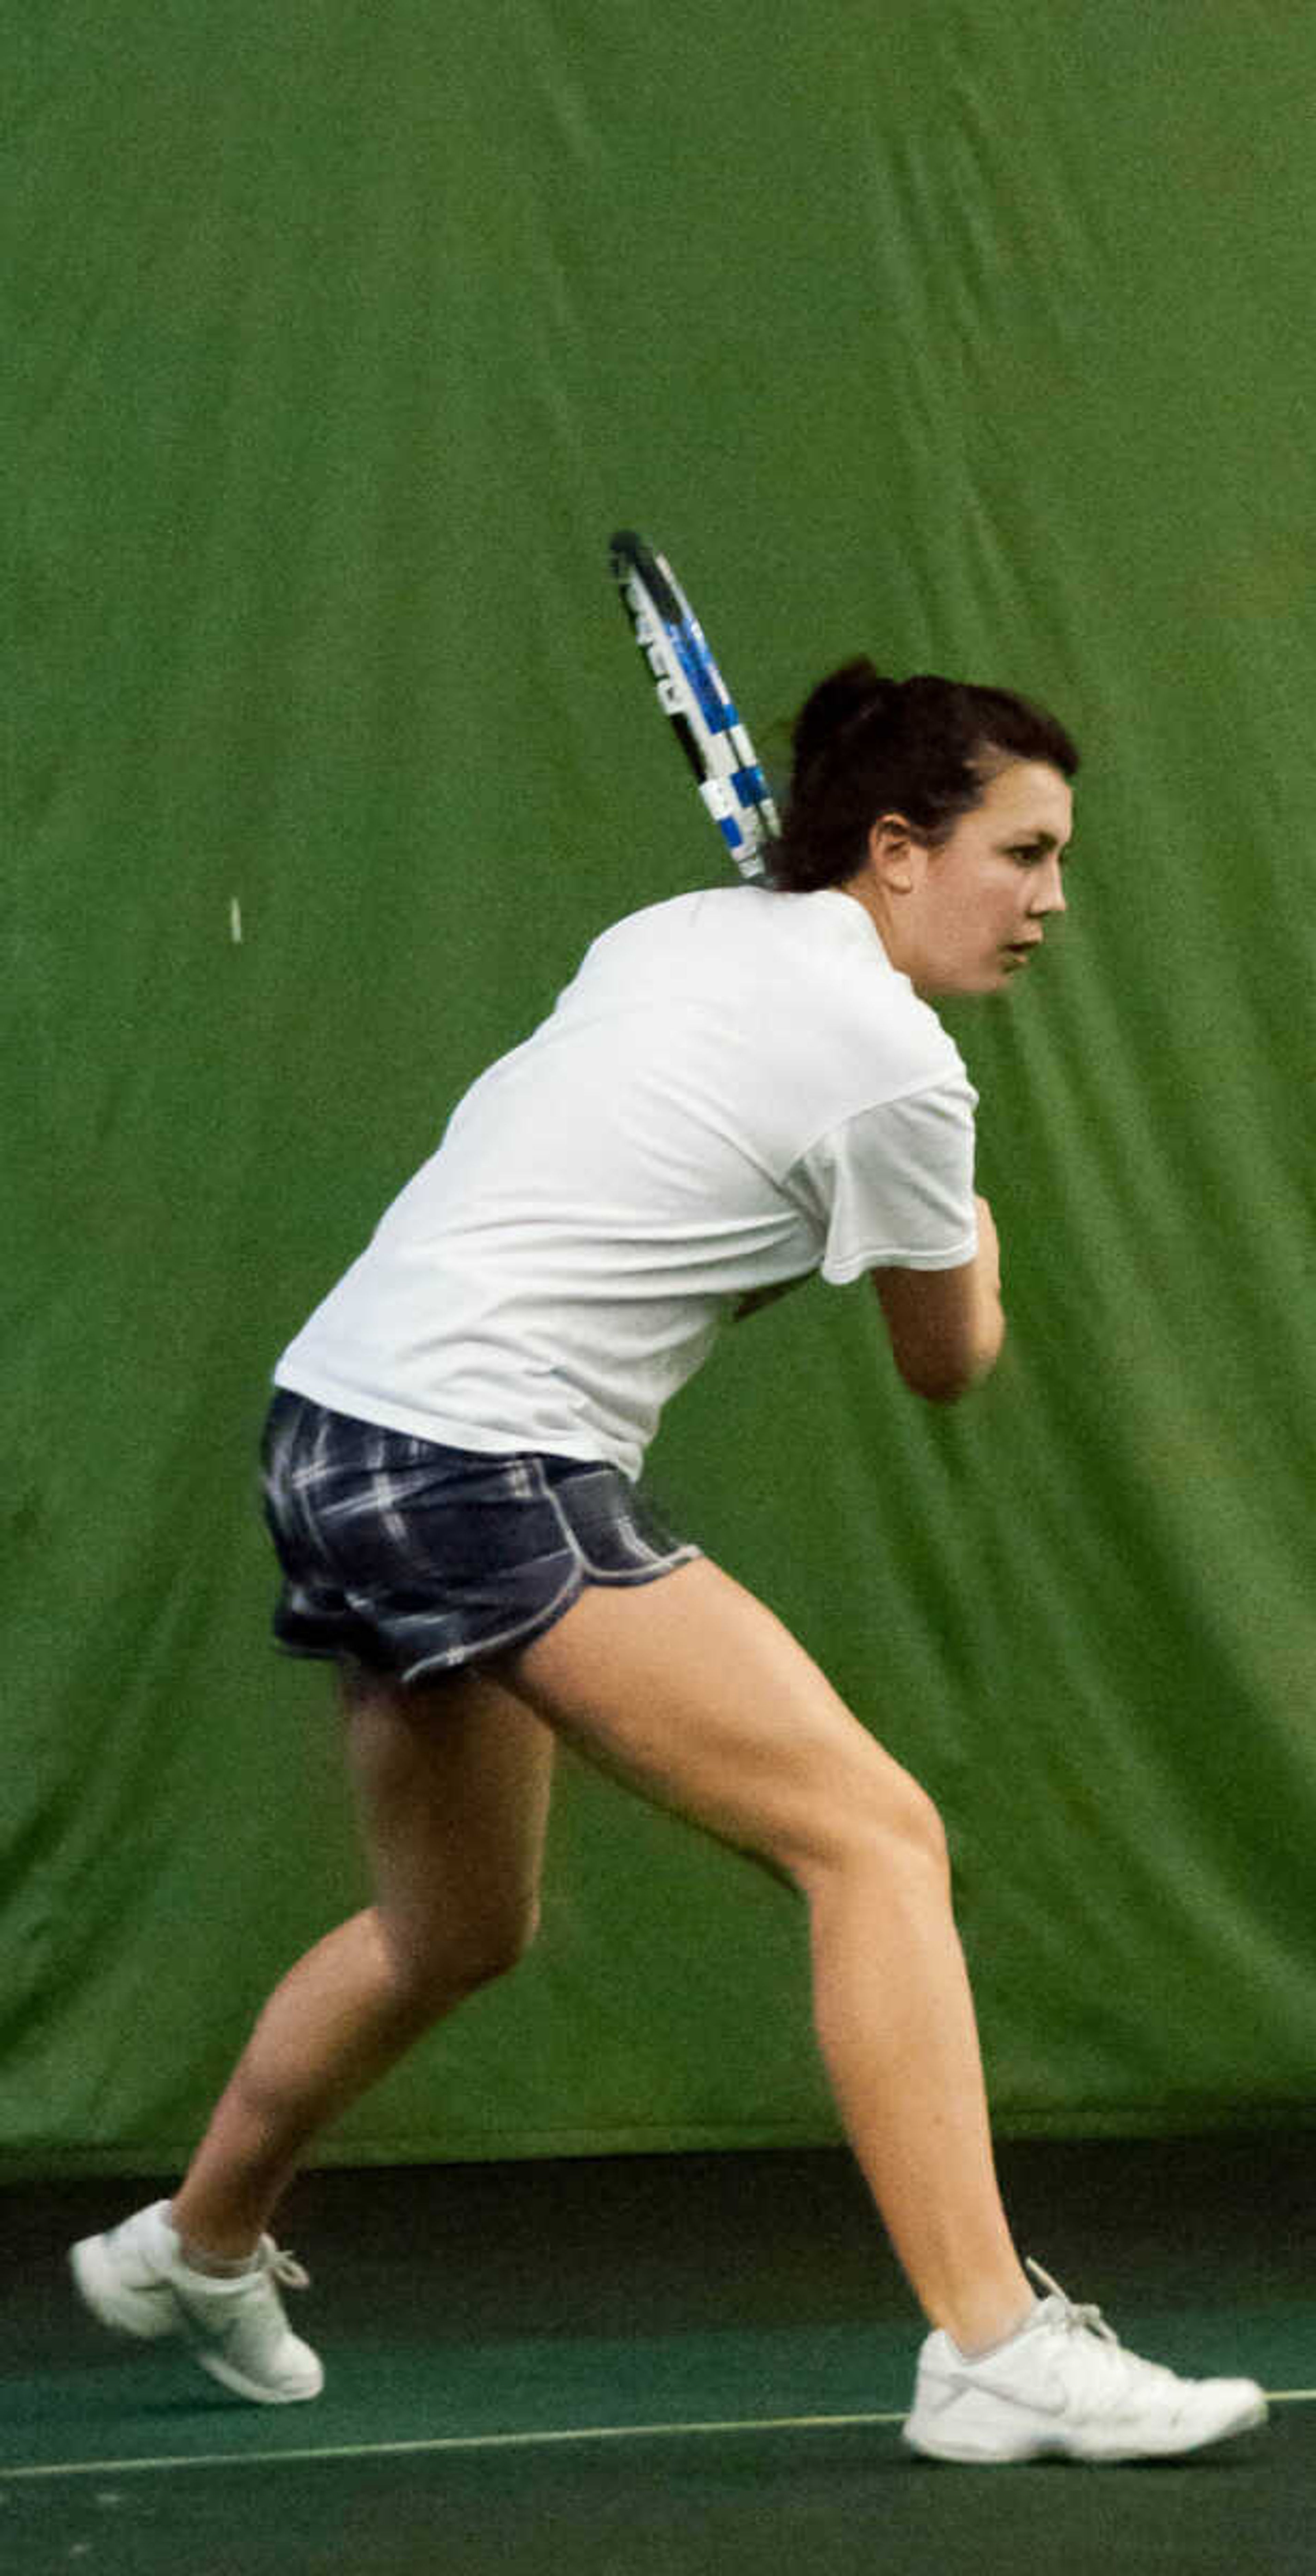 Melissa Martin practices at the indoor tennis court last spring. Photo by Alyssa Brewer